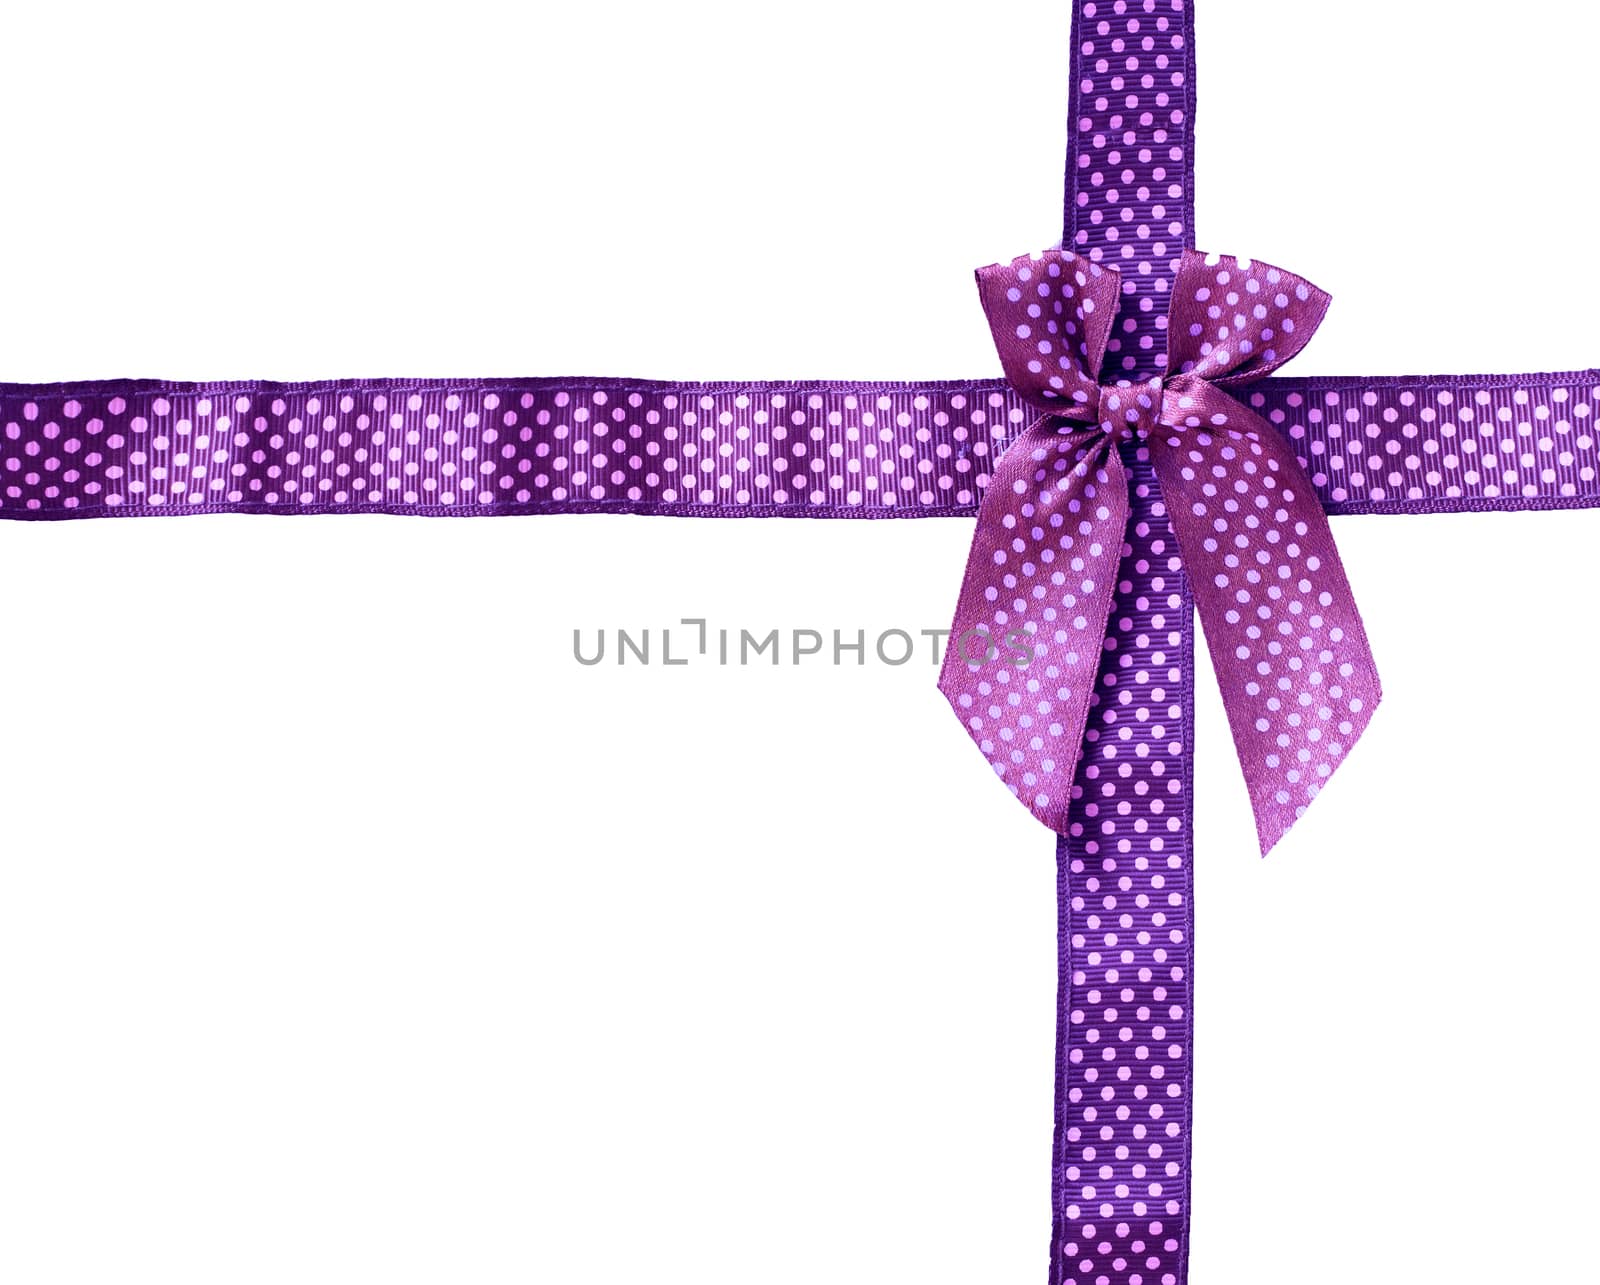 Shiny Ribbon purple (bow) gird box frame isolated on white backg by jayzynism